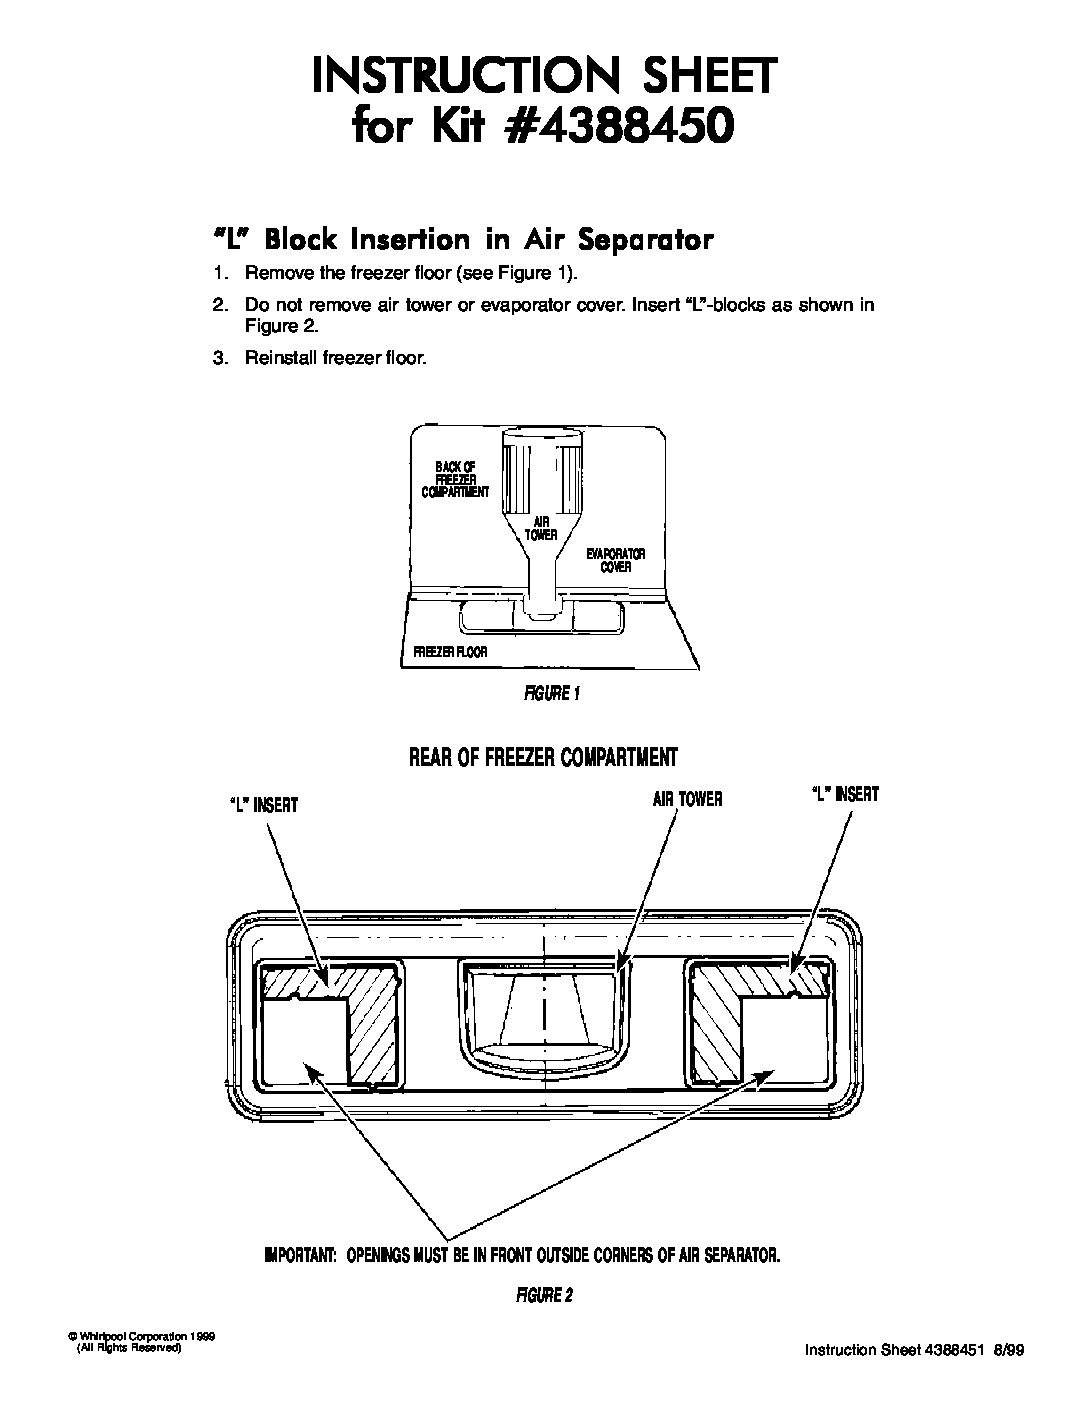 Whirlpool Refrigerator Air Separator Insert. Part #4388450